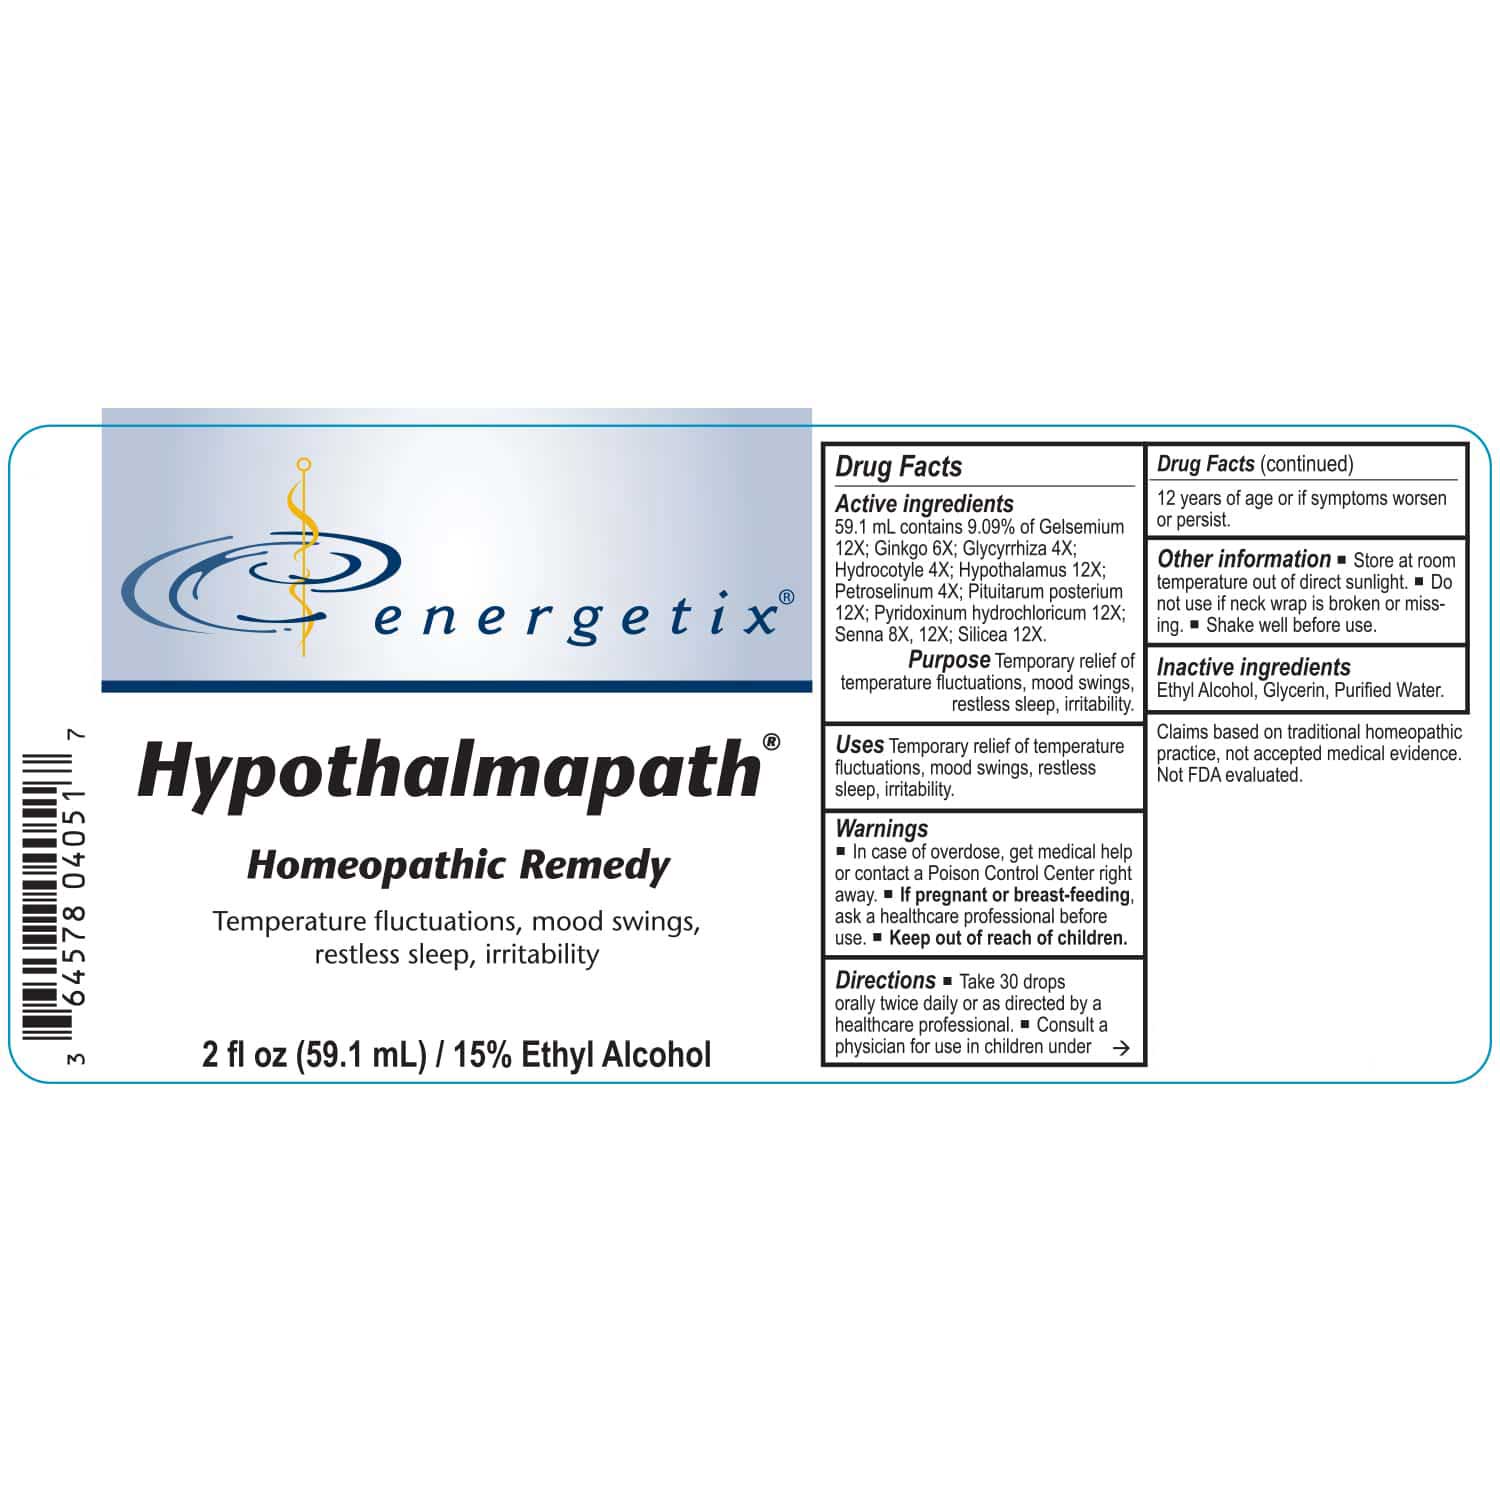 Energetix Hypothalmapath Label